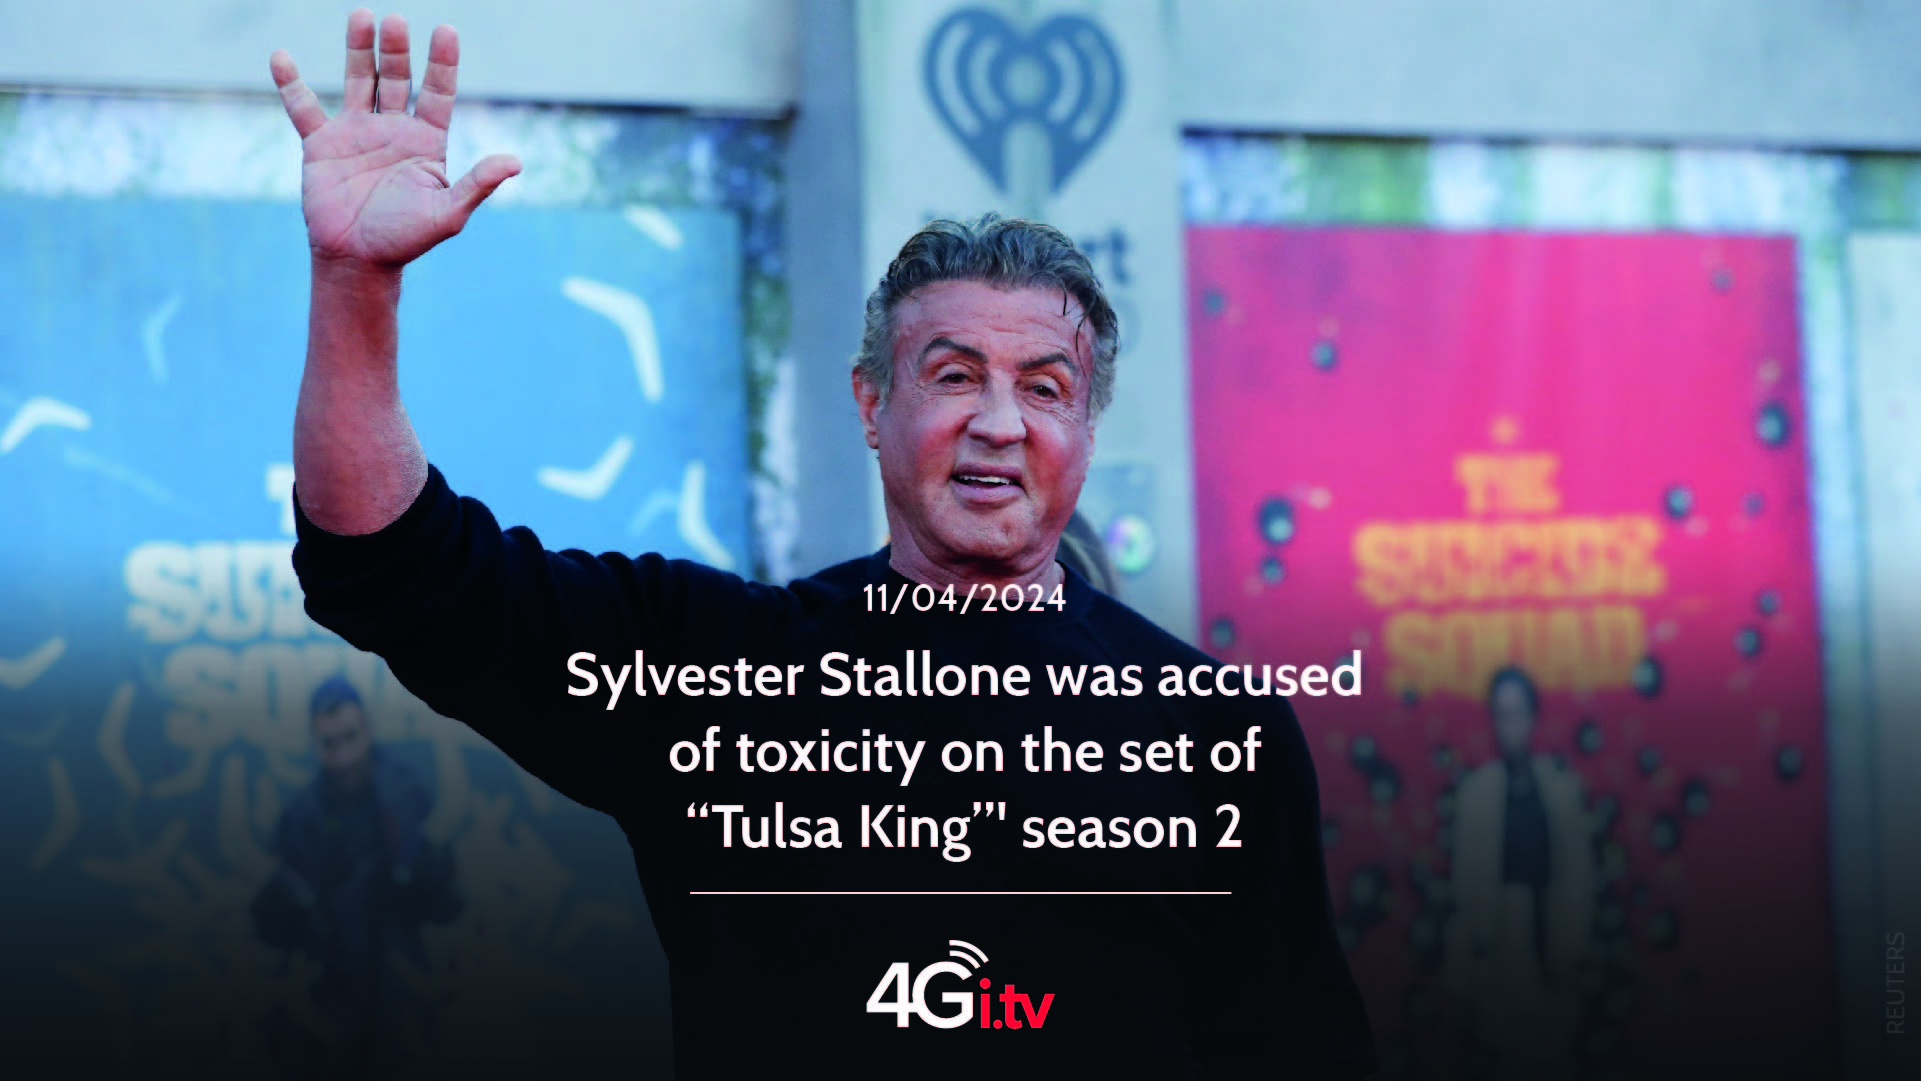 Lesen Sie mehr über den Artikel Sylvester Stallone was accused of toxicity on the set of “Tulsa King”’ season 2